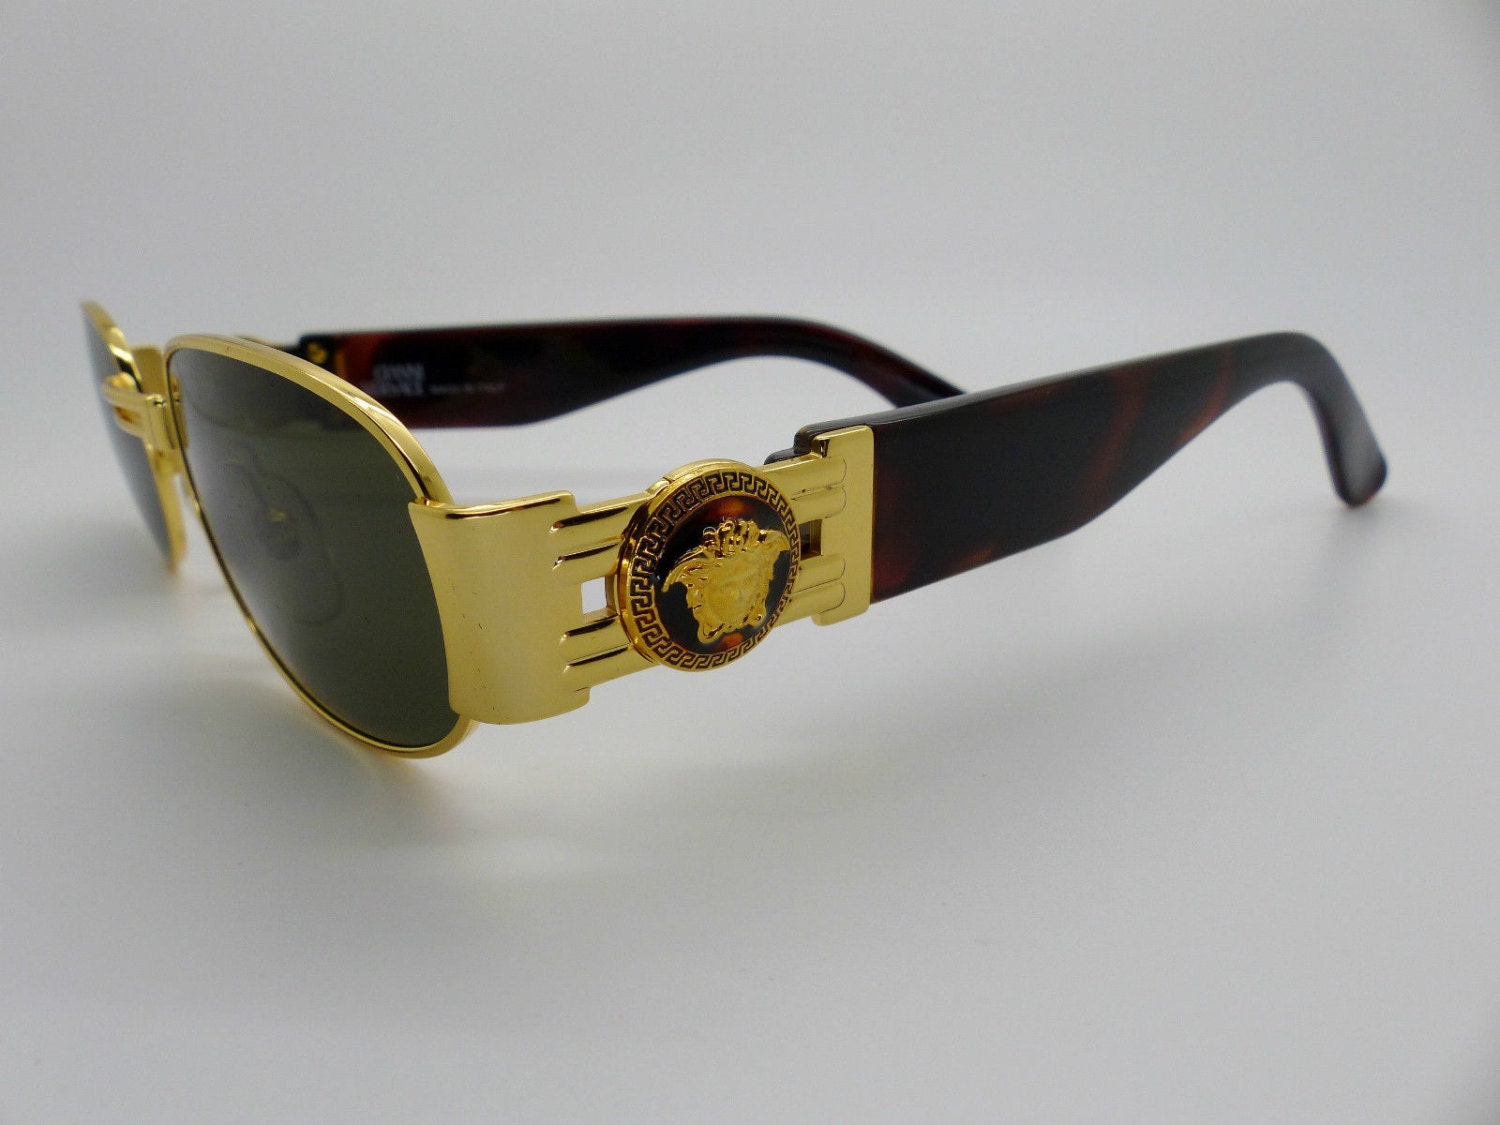 Genuine Rare Vintage Gianni Versace Medusa Sunglasses Mod S70 